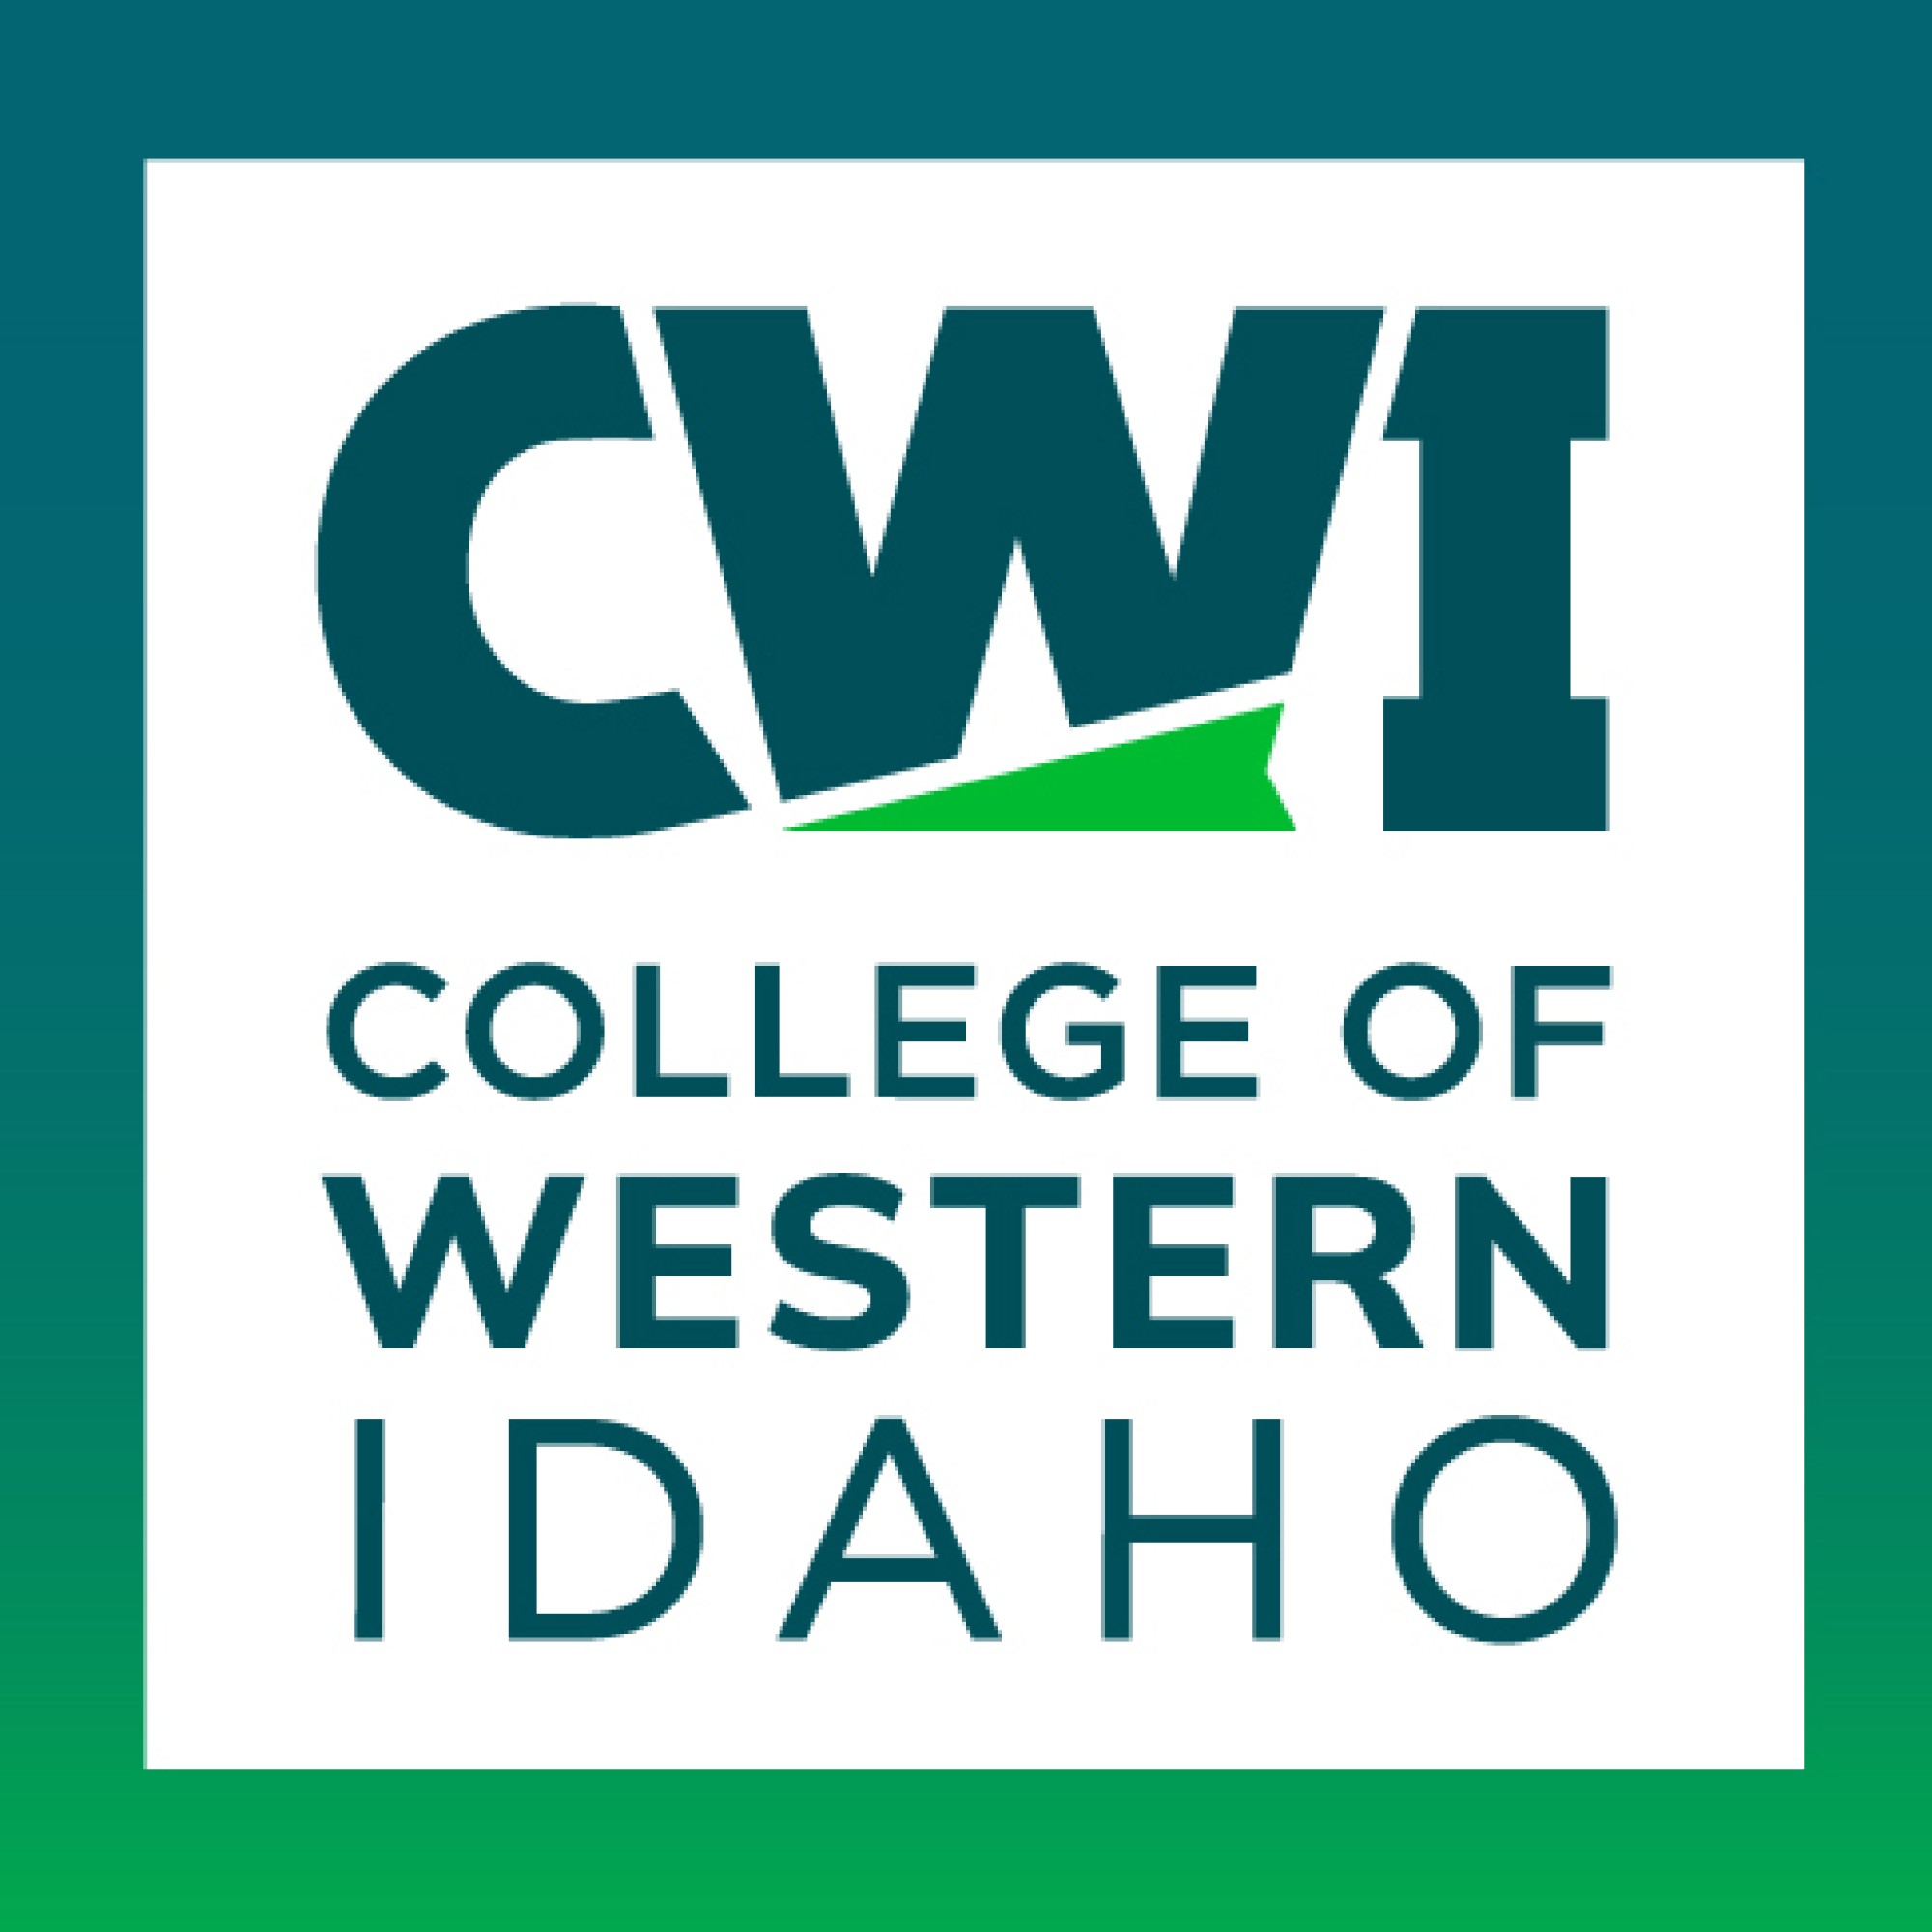 College of Western Idaho's new logo mark